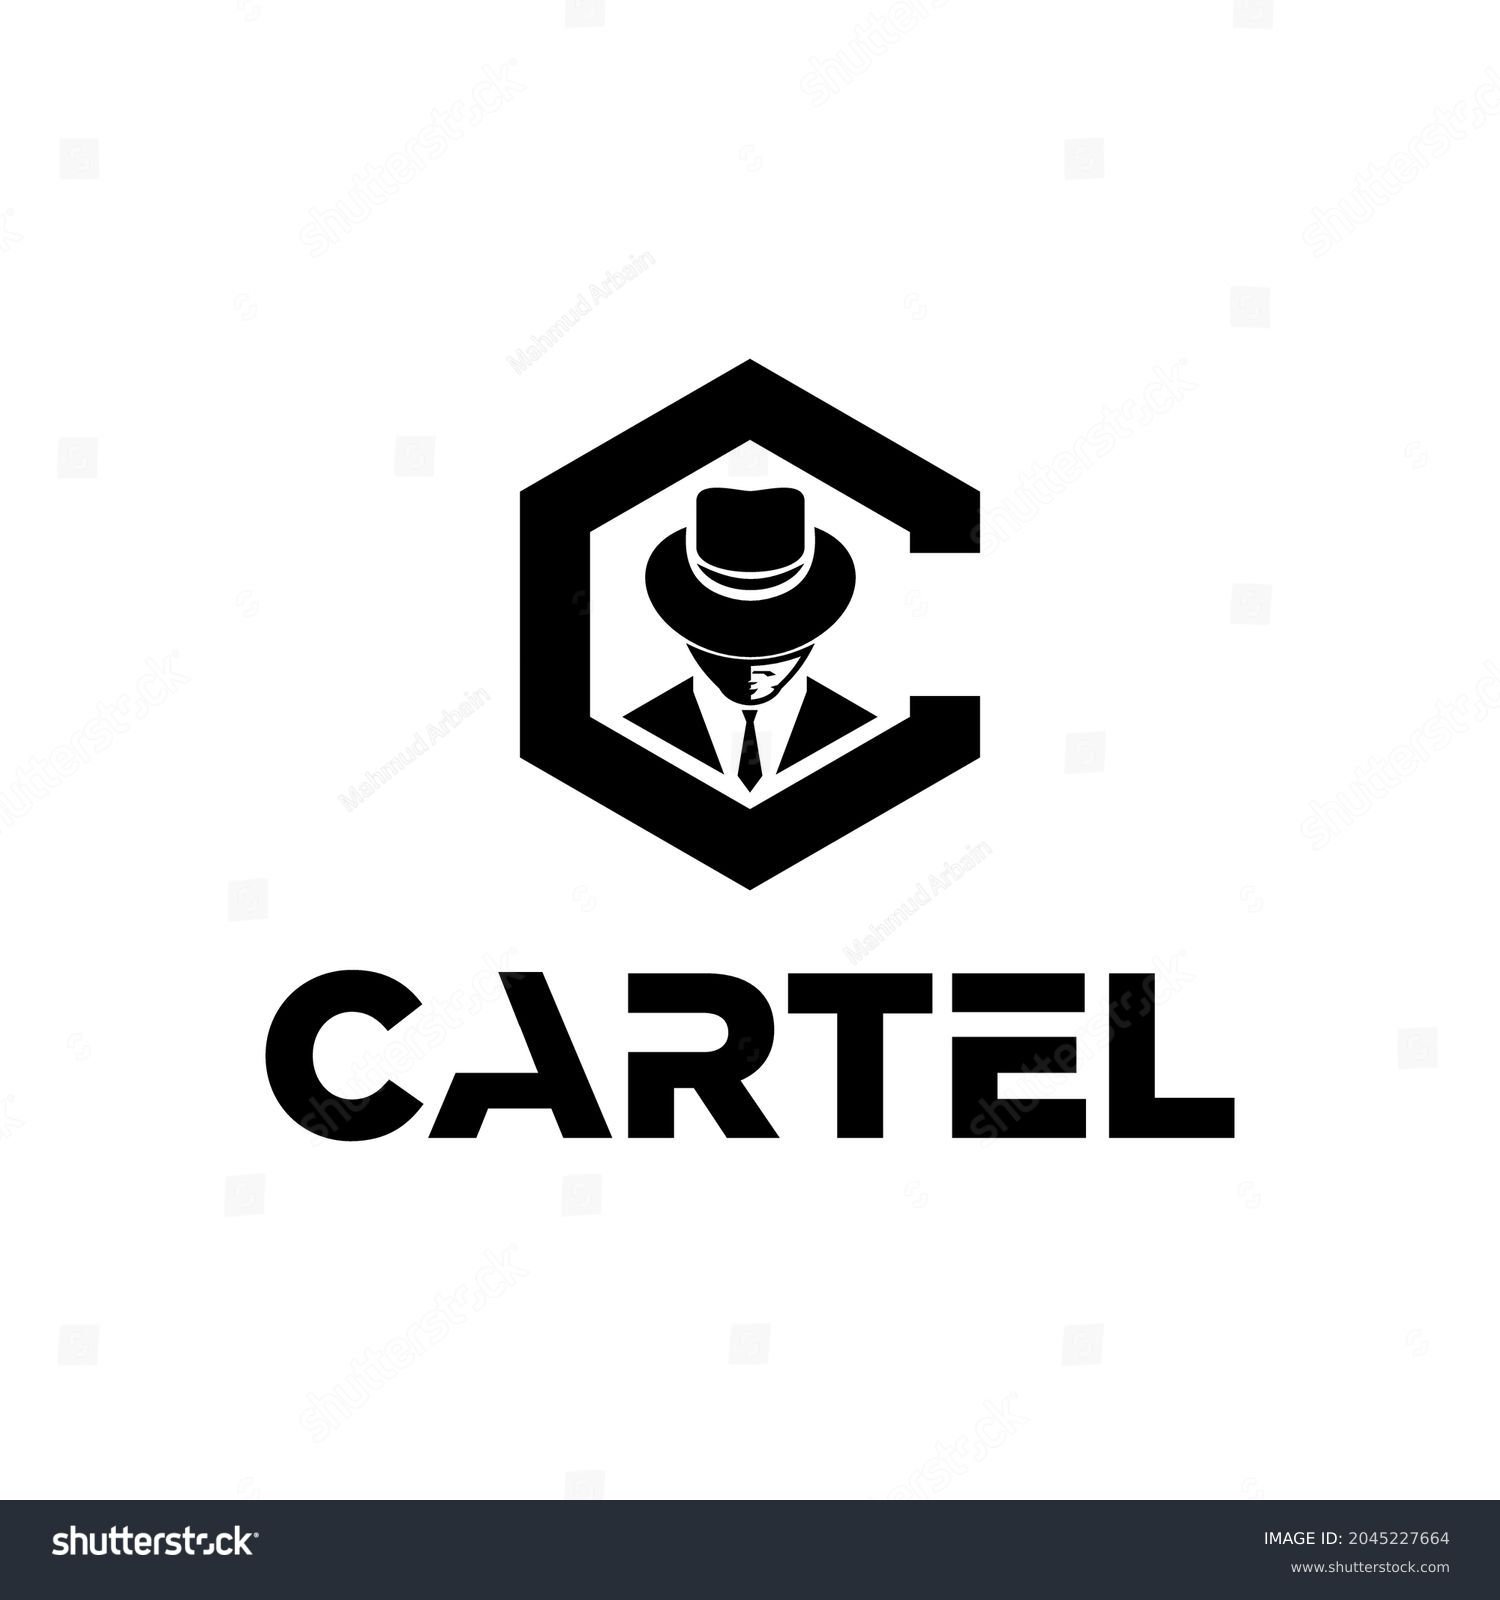 cartel logo ideas 1